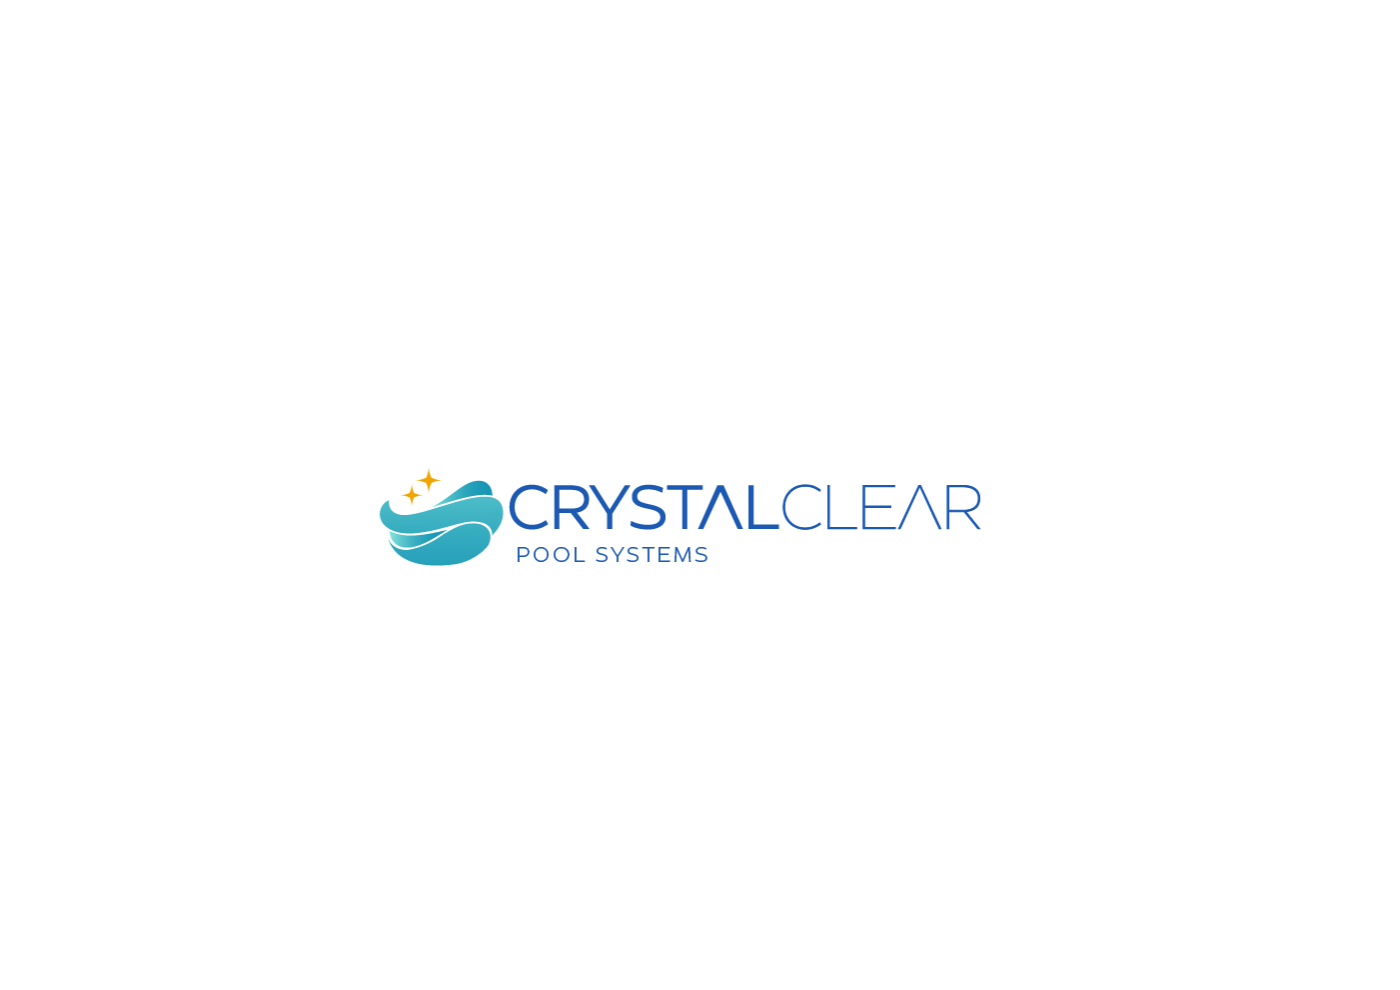 Crsytal Clear Pool Systems Kurumsal Kimlik Tasarımı